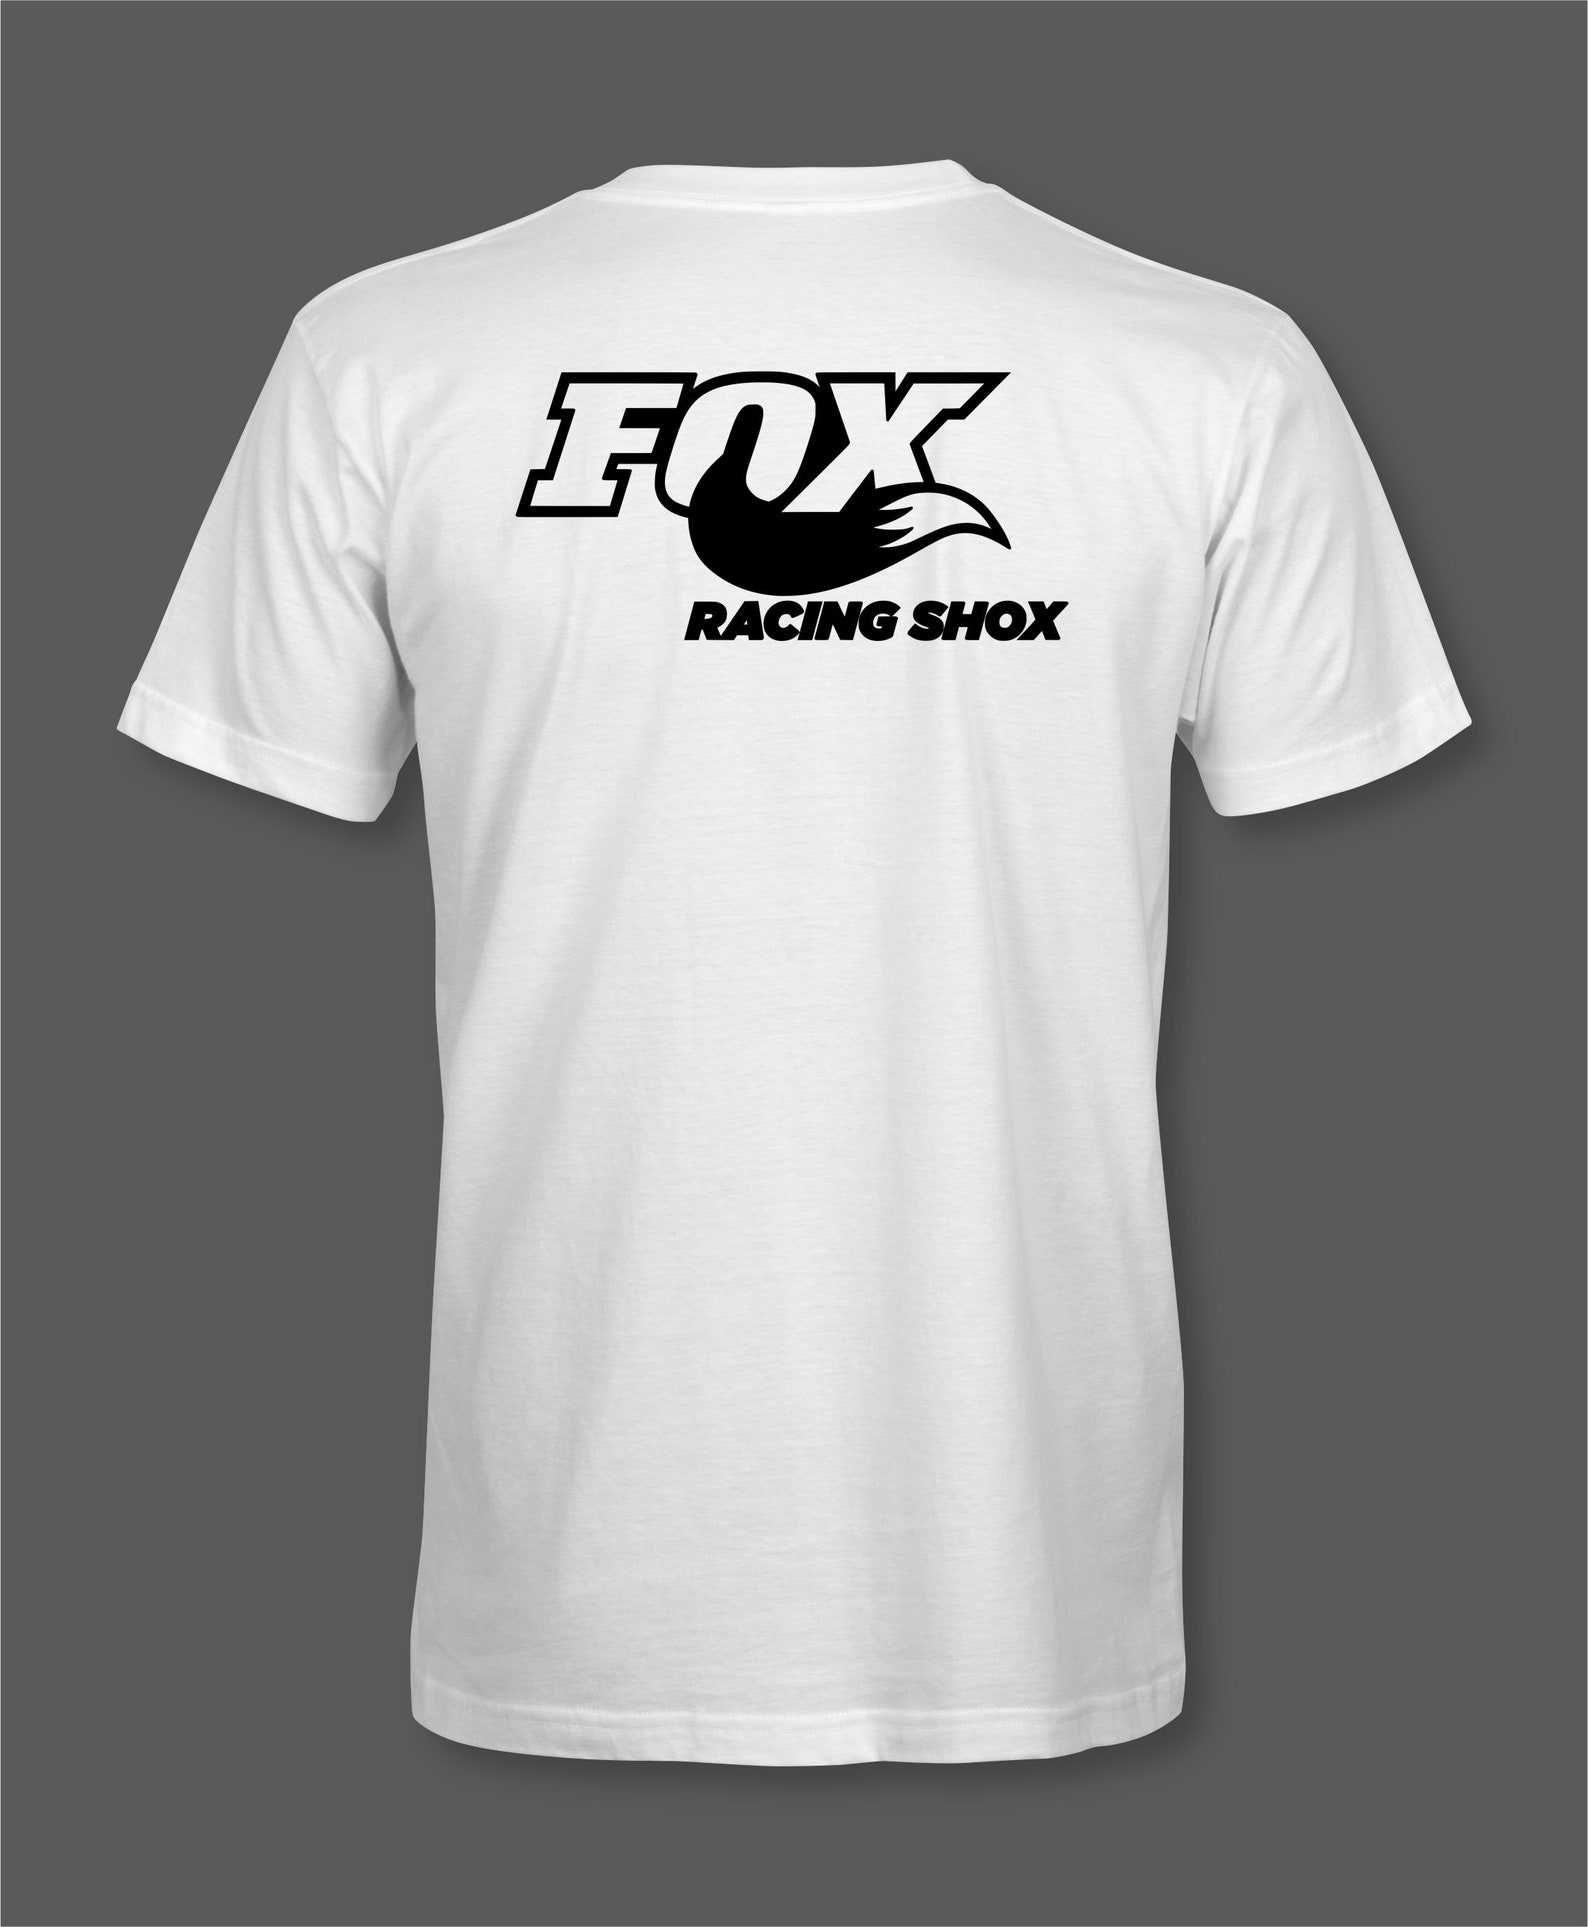 FOX RACING SHOX T-shirt 50/50 Cotton Blend Pre-shrunk Baja - Etsy